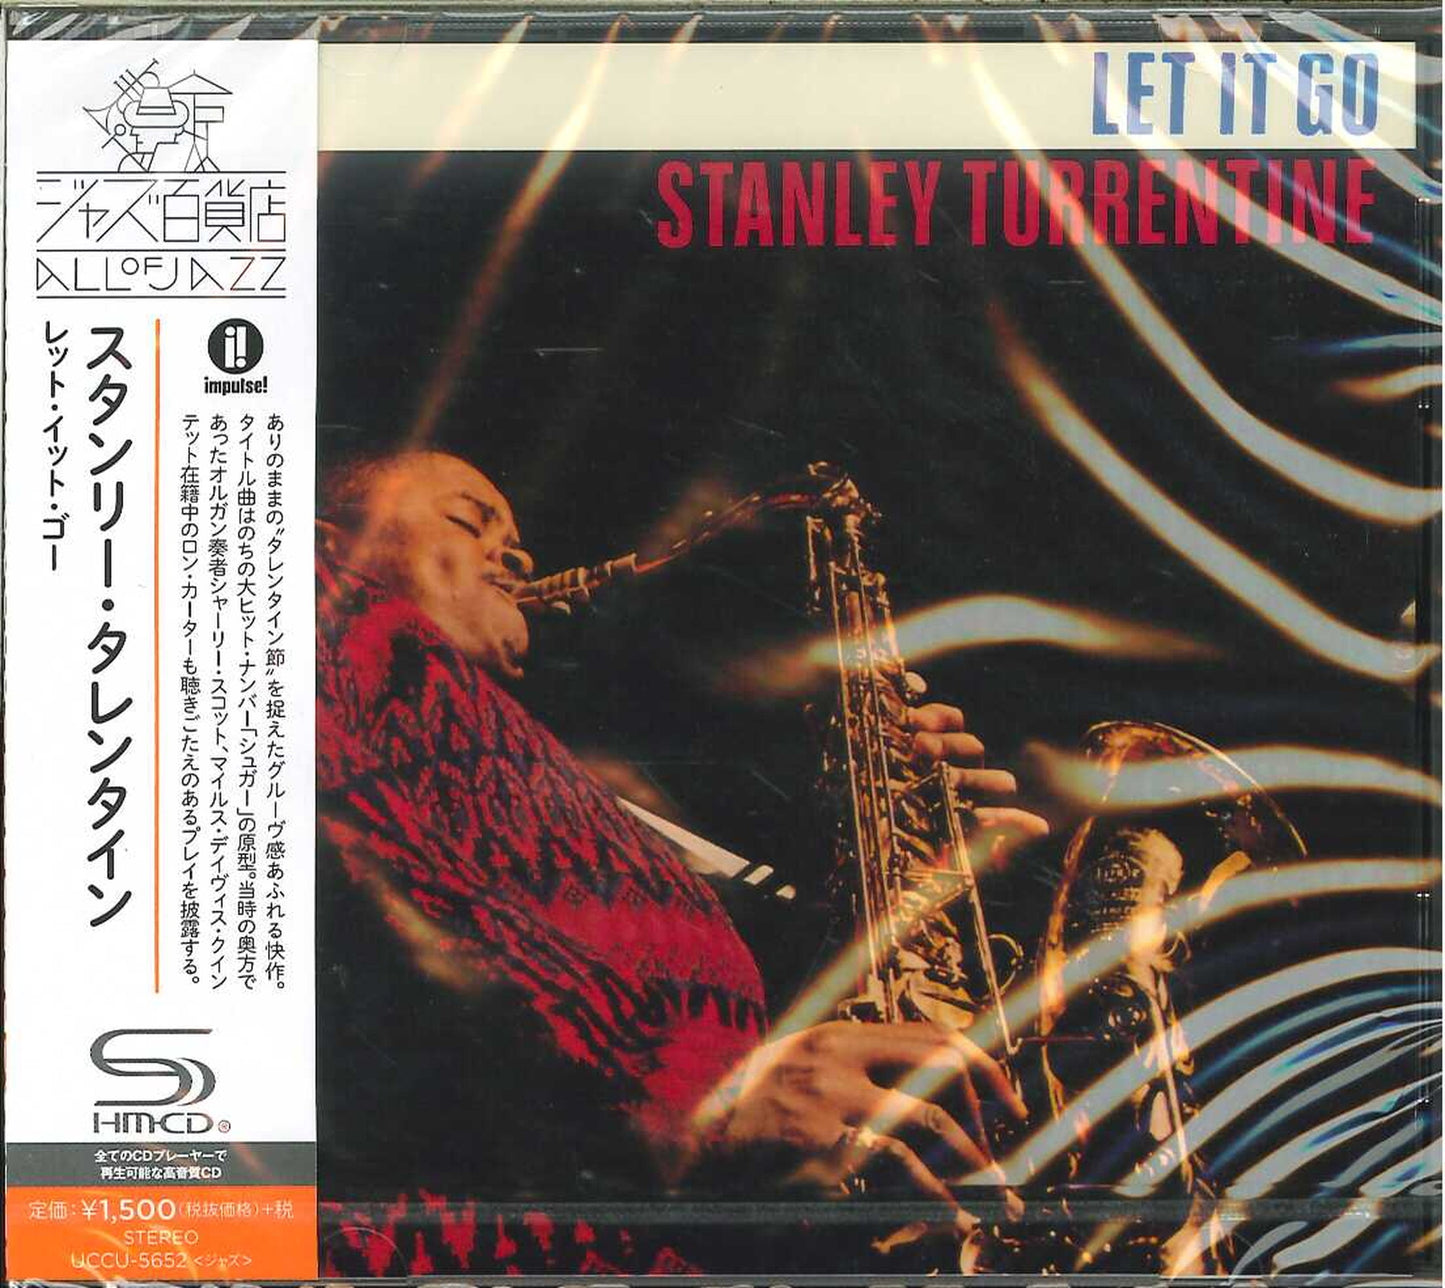 Stanley Turrentine - Let It Go - SHM-CD